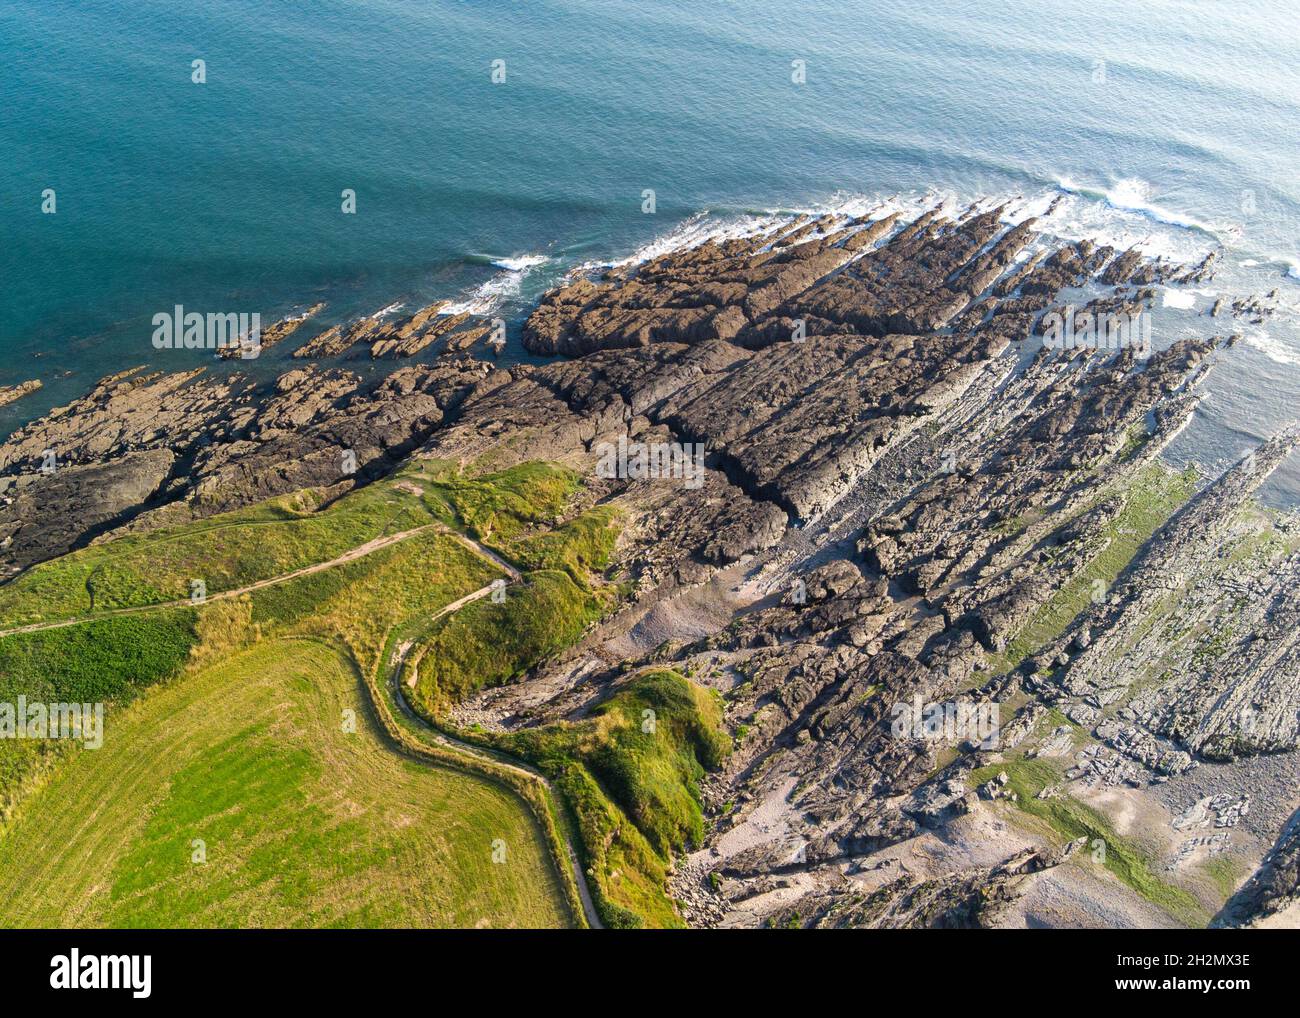 Aerial view of the rocky coastline - Croyde, Devon, England Stock Photo